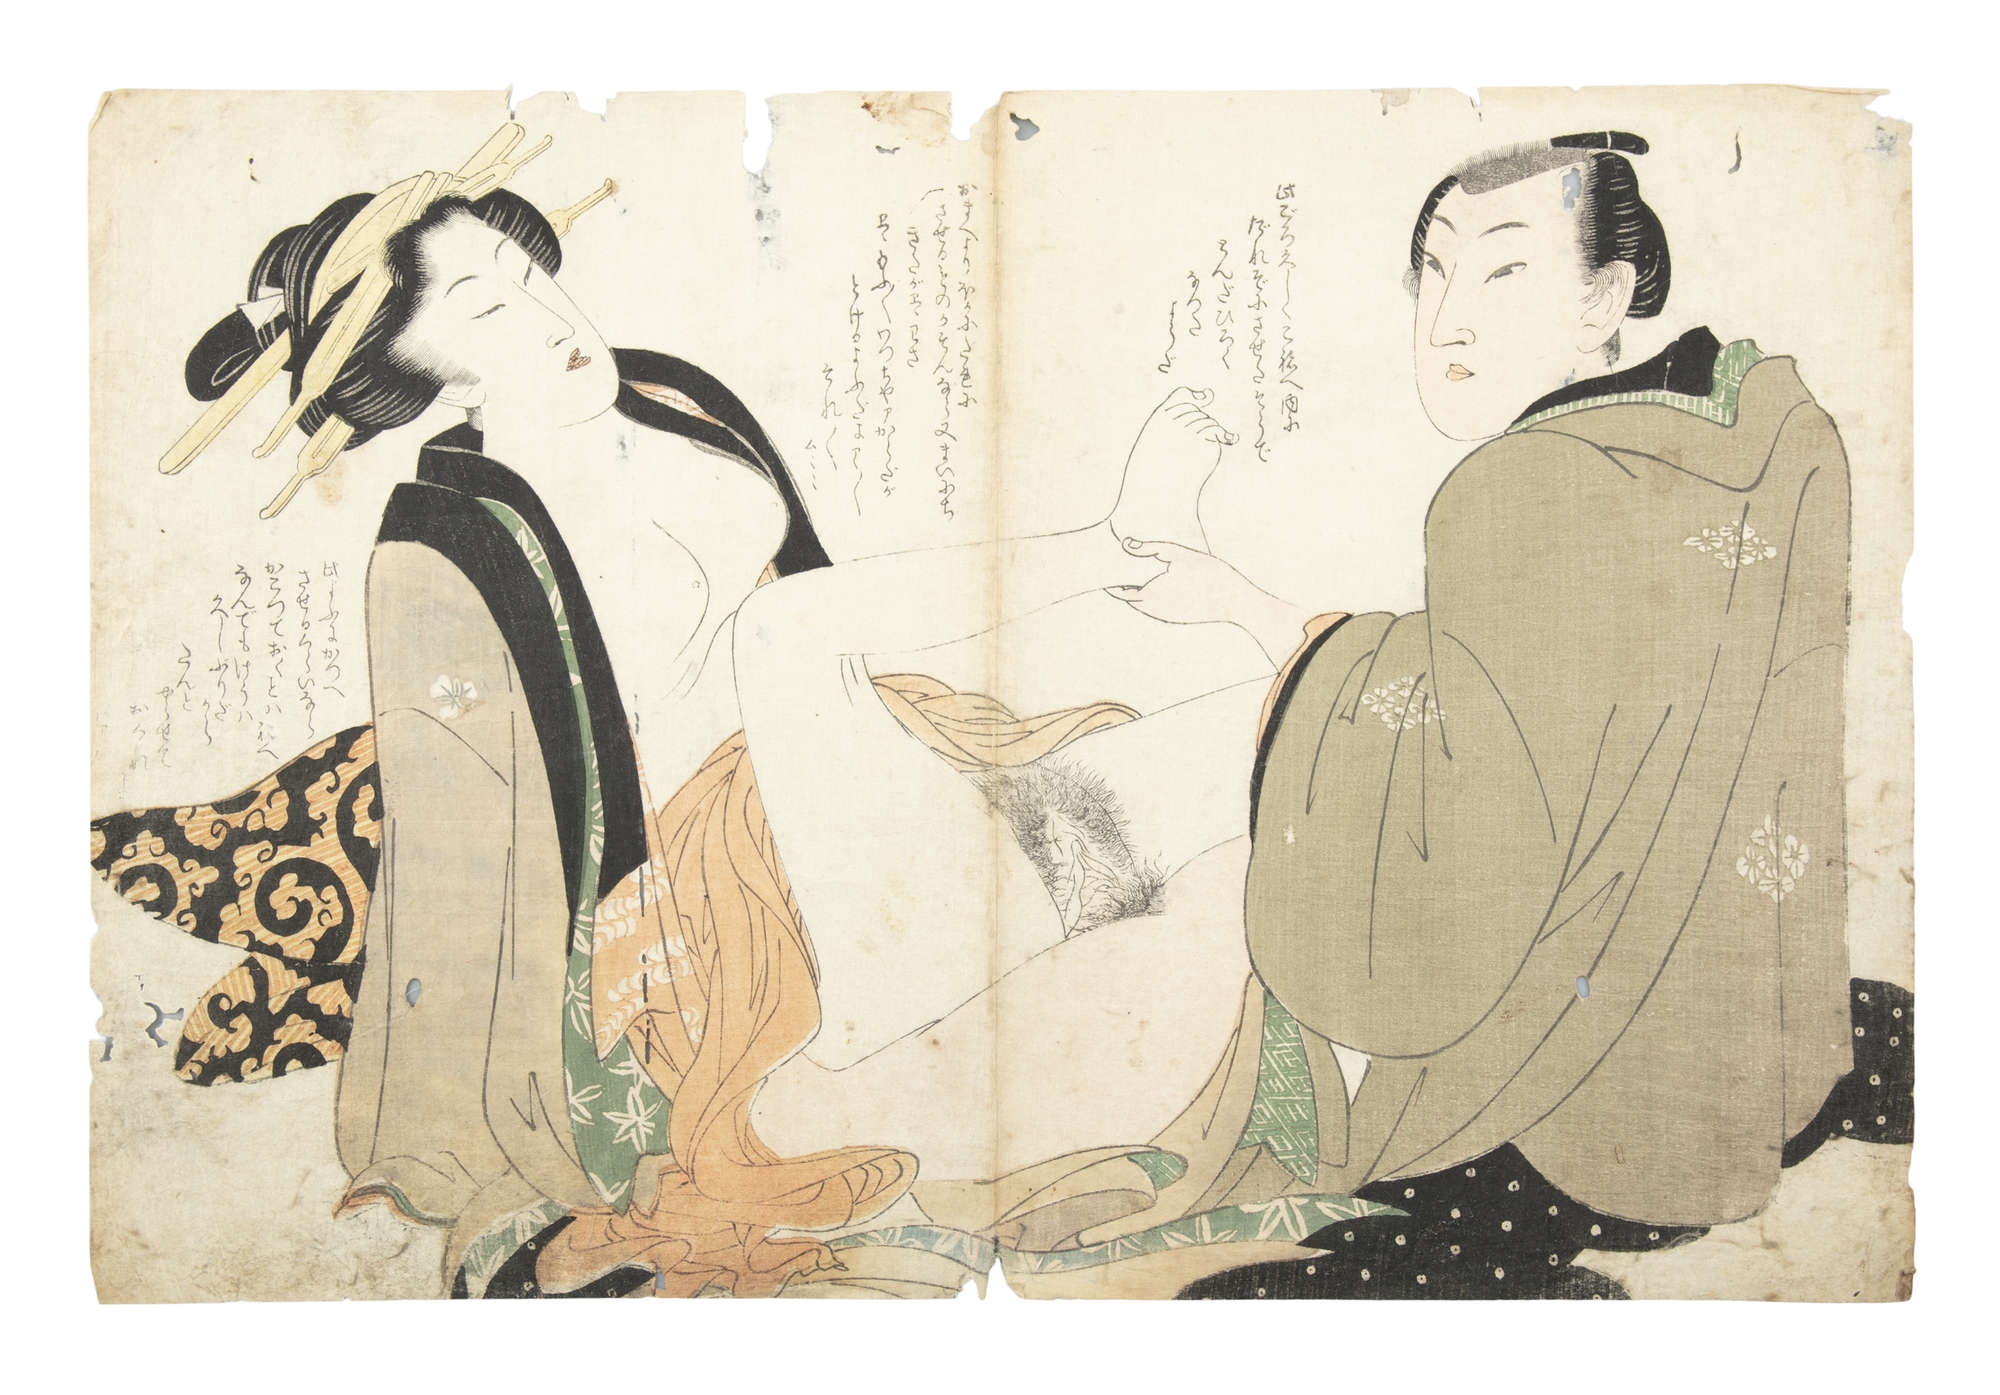 Shunga (erotic subject) by Kikukawa Eizan, 1850